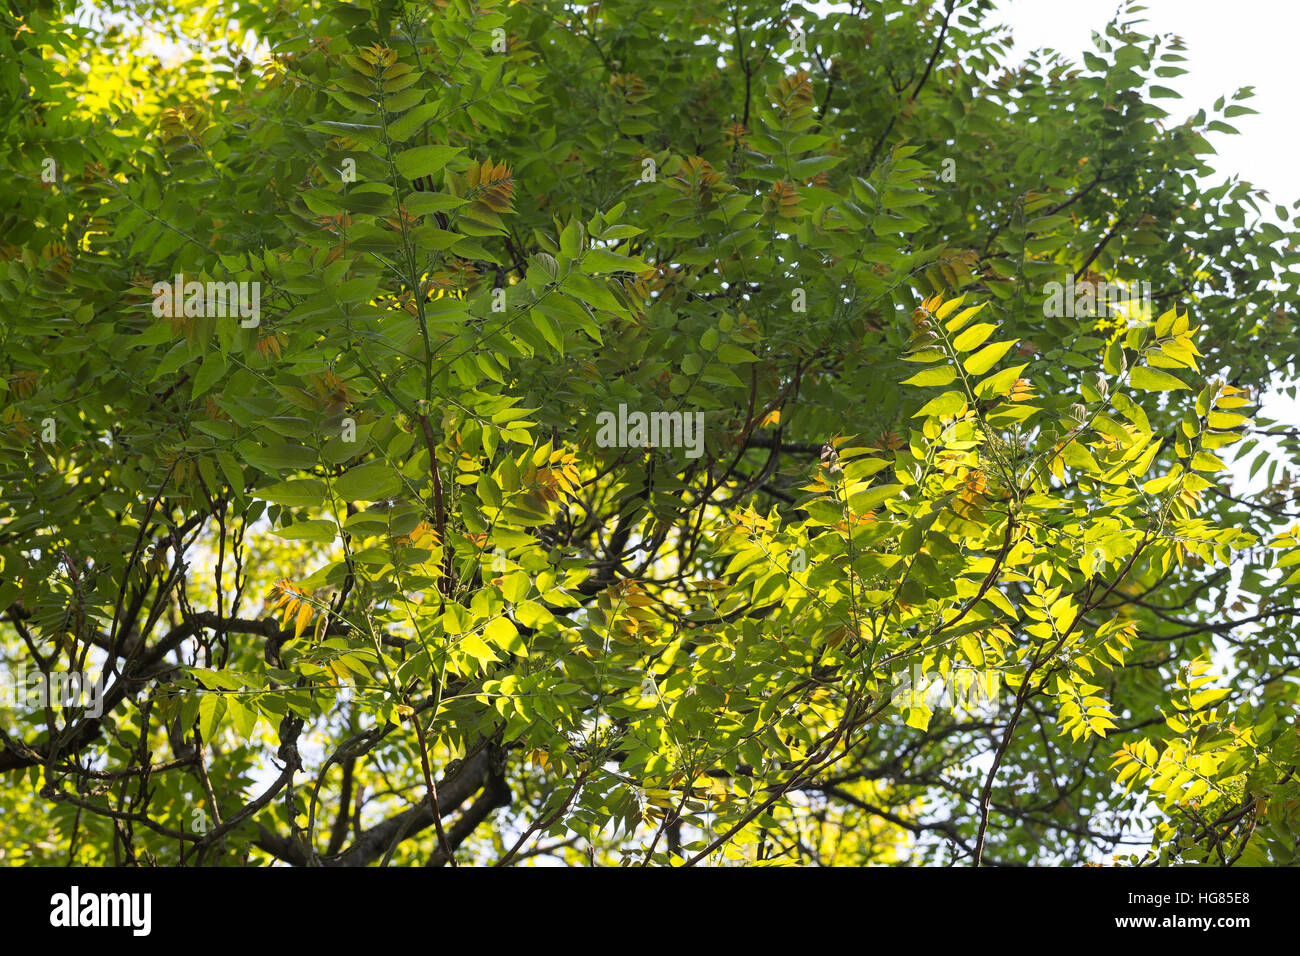 Götterbaum, Chinesischer Götterbaum, Ailanthus altissima, Ailanthus glandulosa, tree of heaven, ailanthus, chouchun, L'Ailante glanduleux, Ailante, Fa Stock Photo